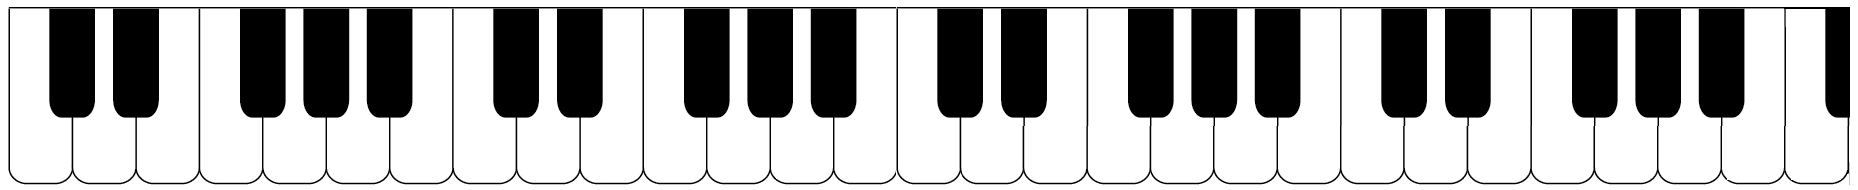 keyboard with white keys and black keys